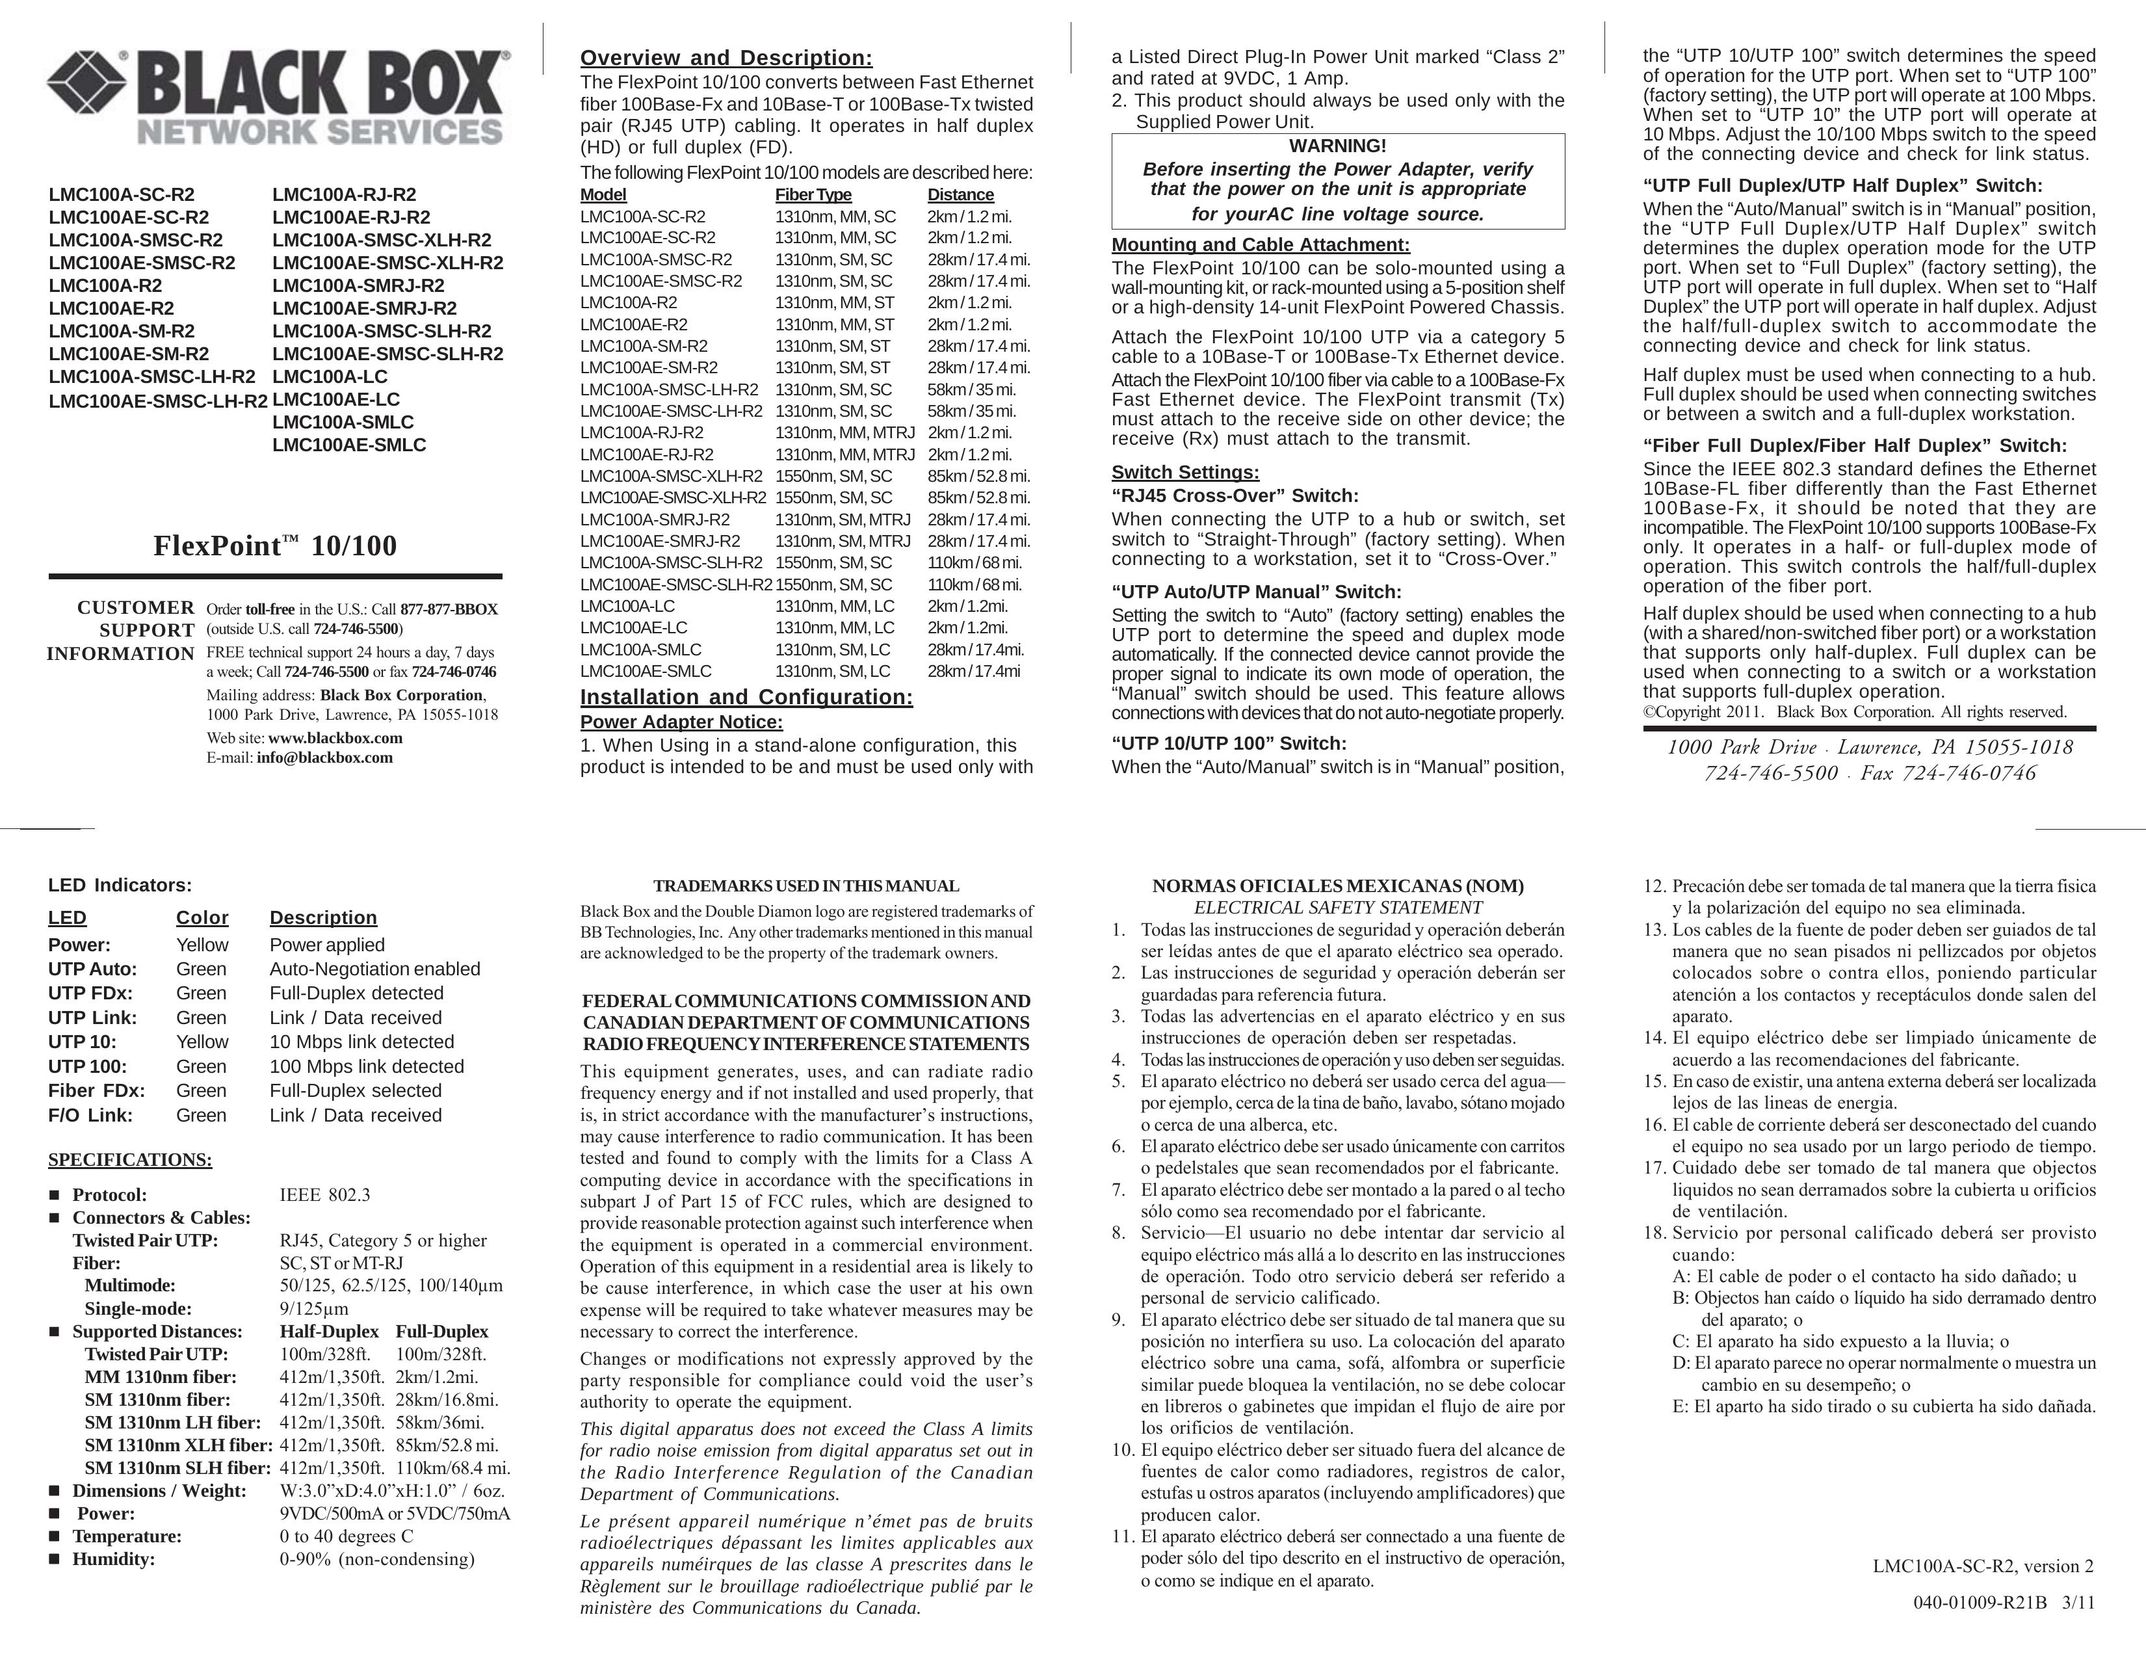 Black Box LMC100A-SM-R2 Network Cables User Manual